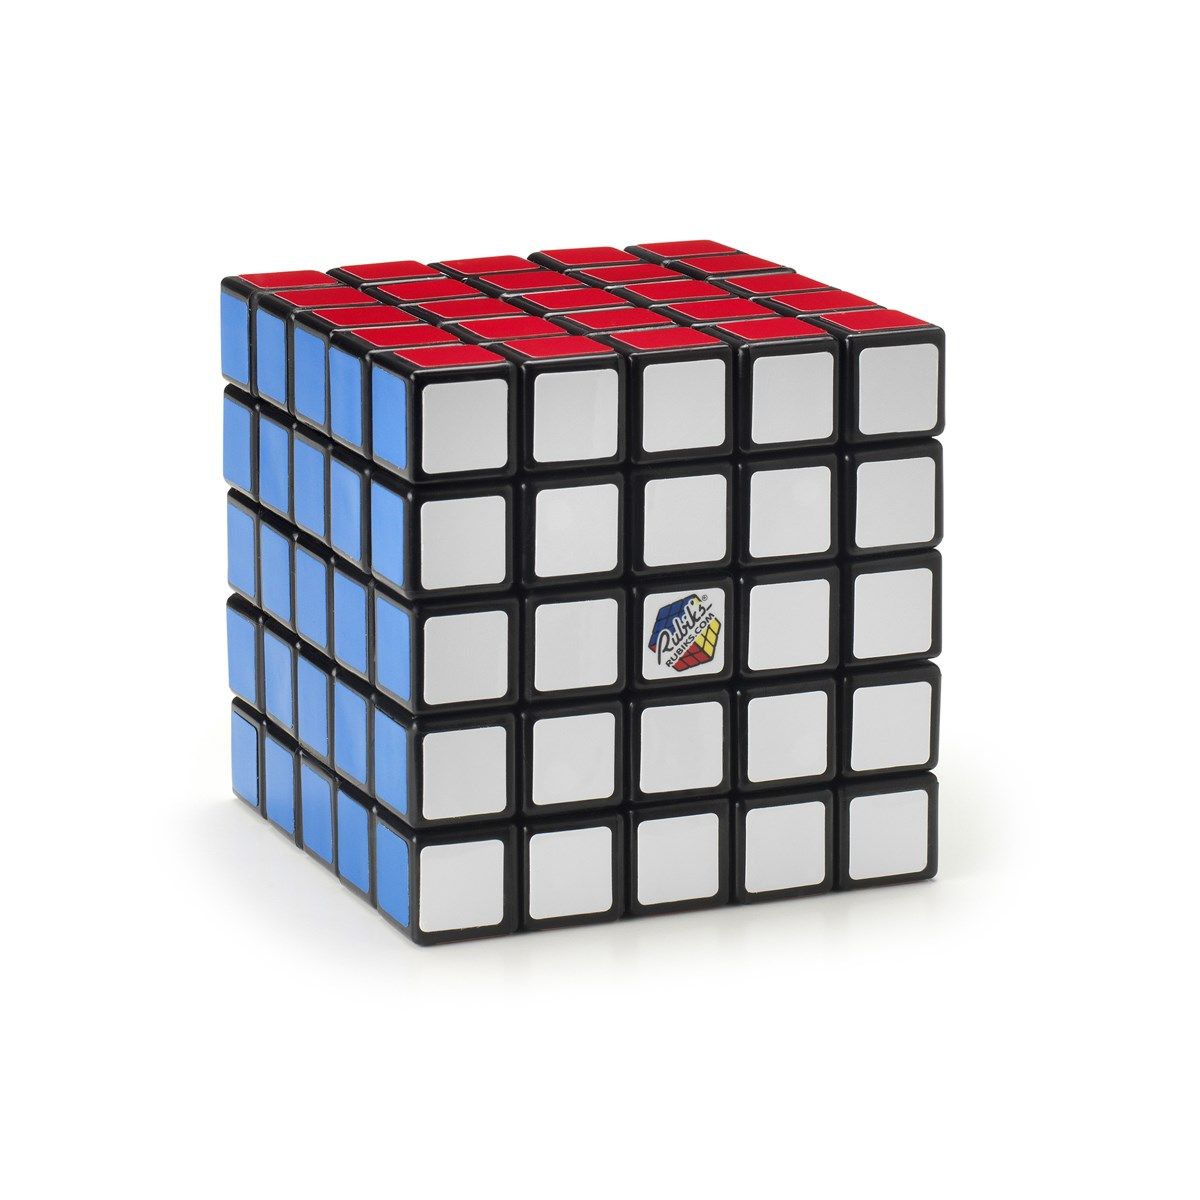 5x5 Professor Cube